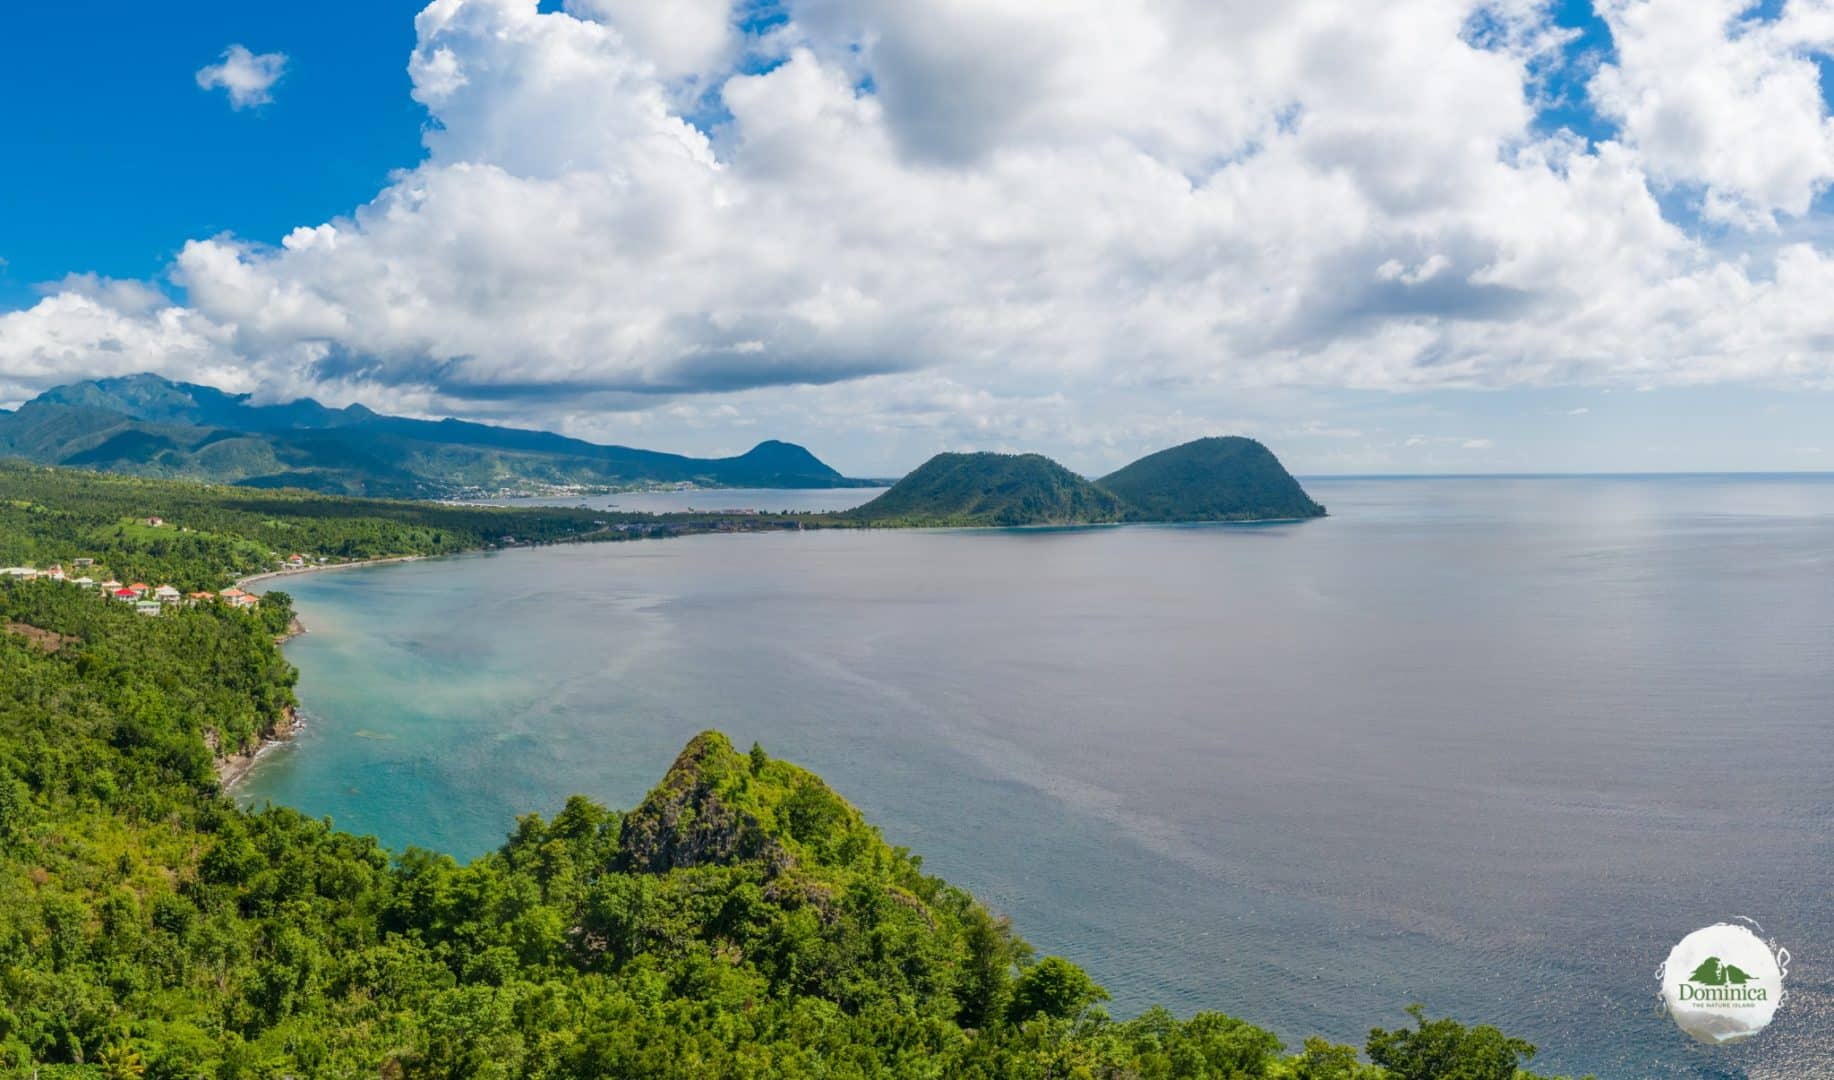 Cabrits view 加勒比视图 多米尼克介绍 自然景观 Dominica, the Nature Island in Caribbean 加勒比的天然之岛